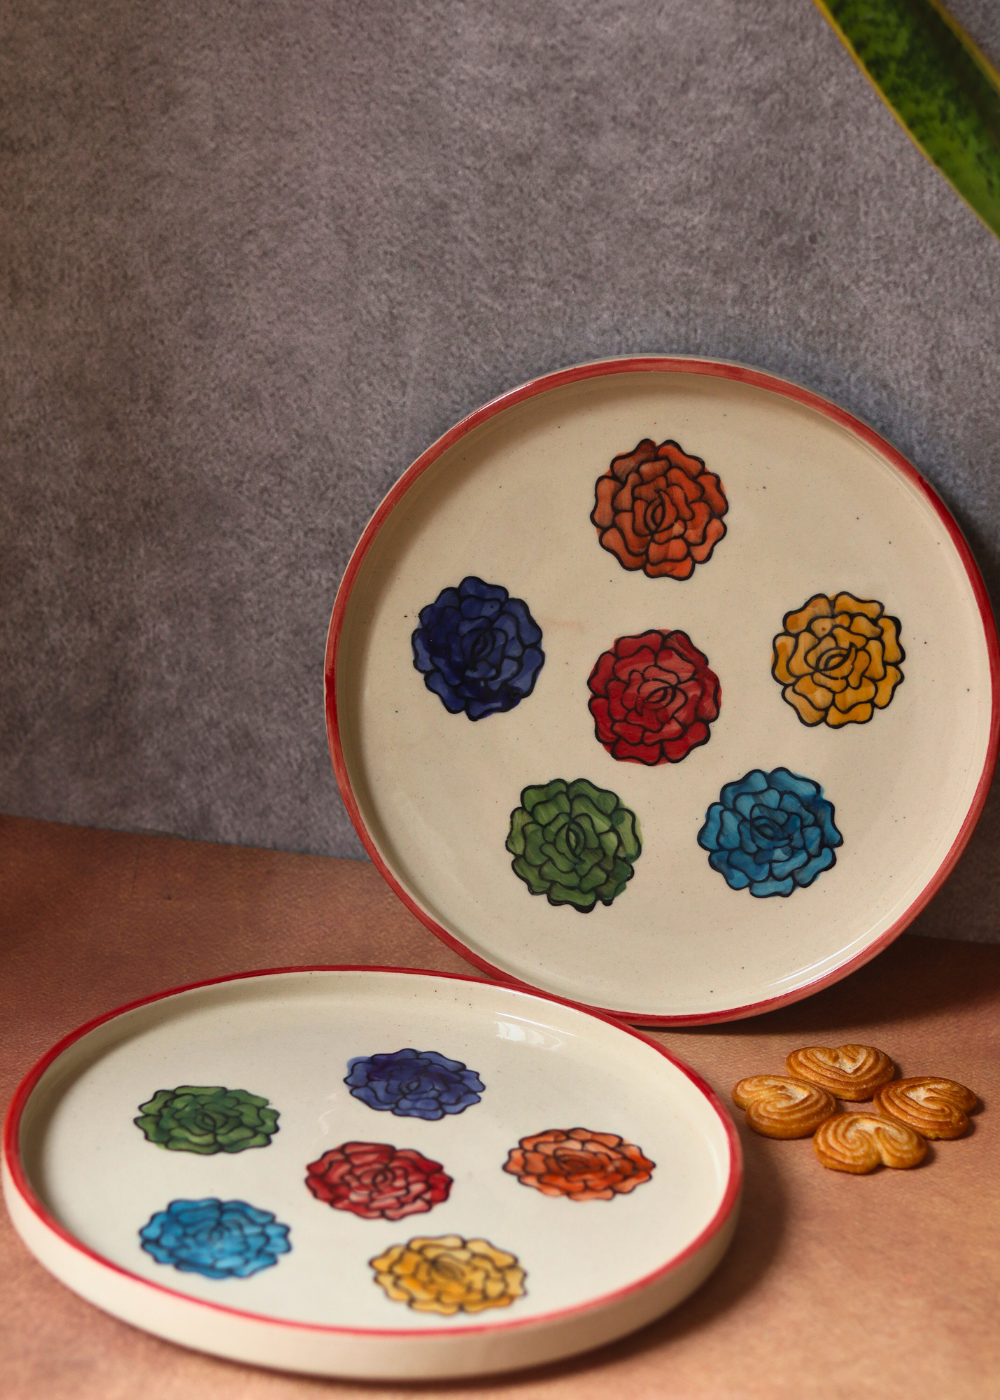 Handmade ceramic platter